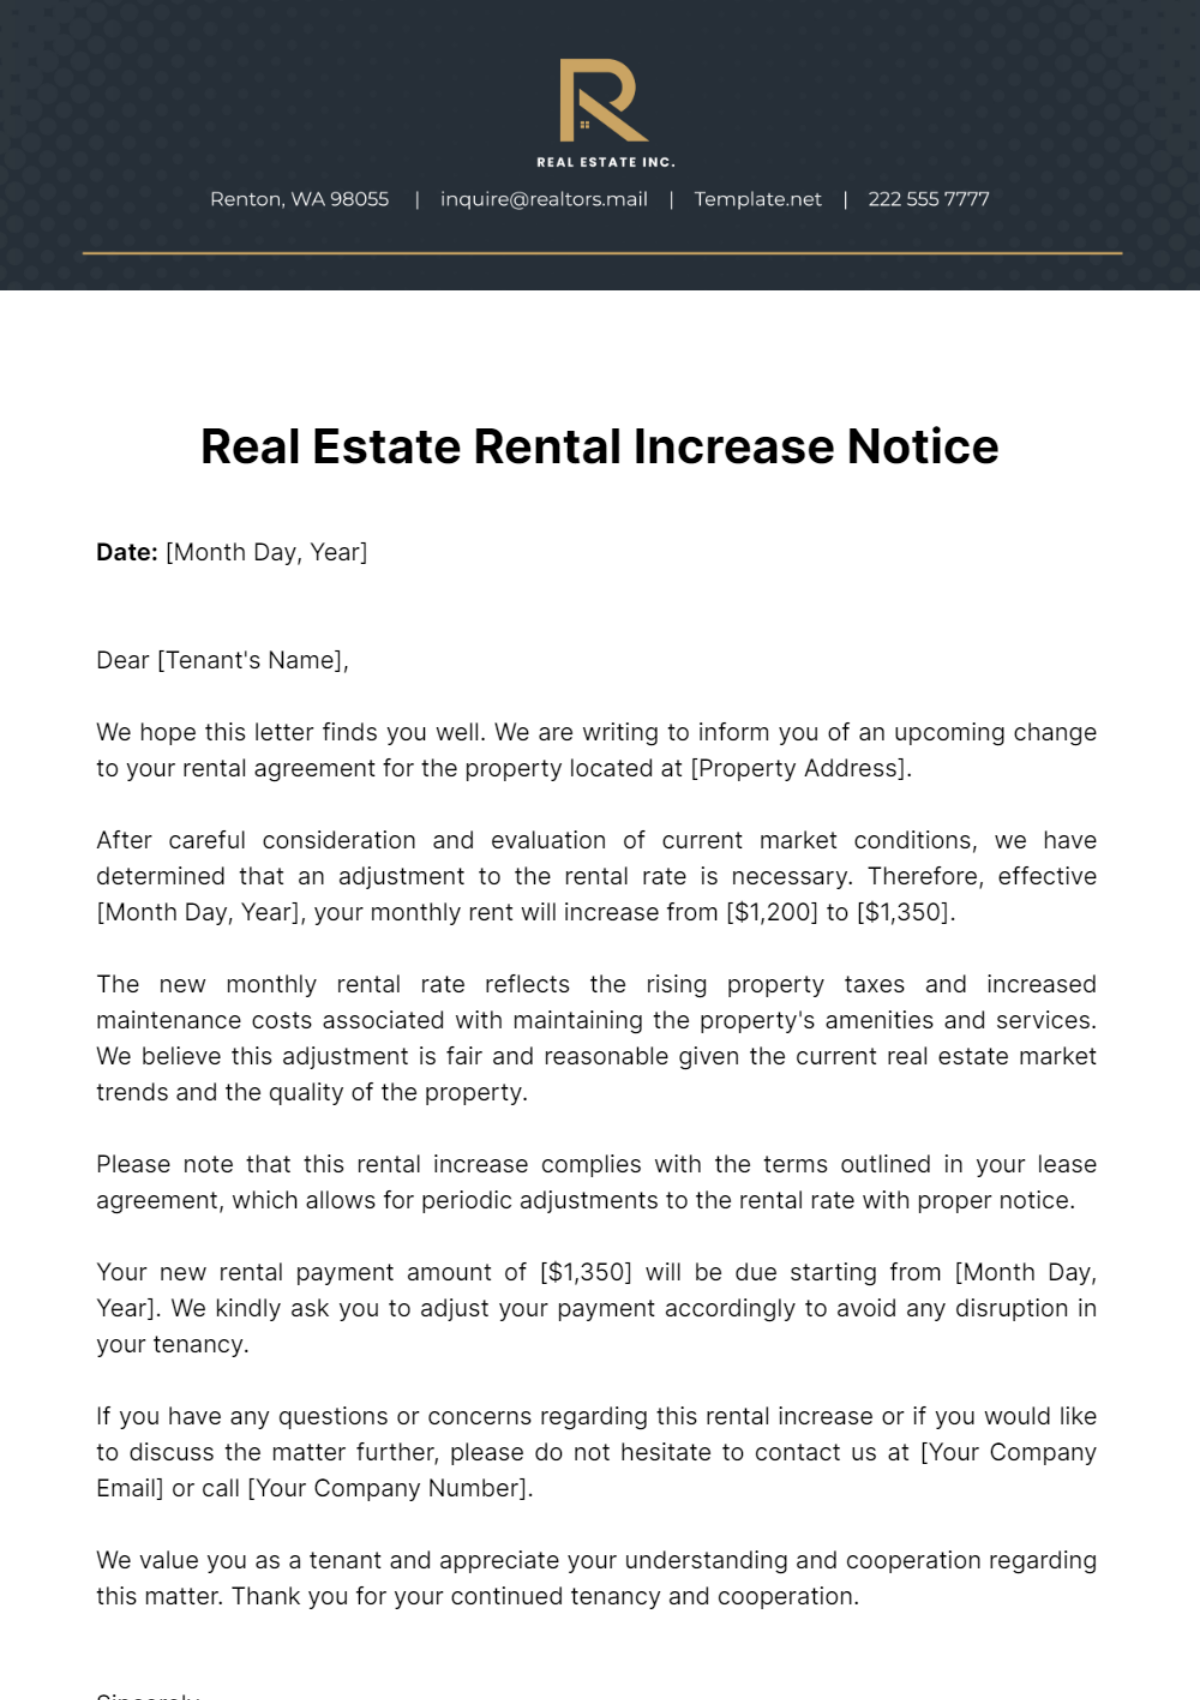 Real Estate Rental Increase Notice Template